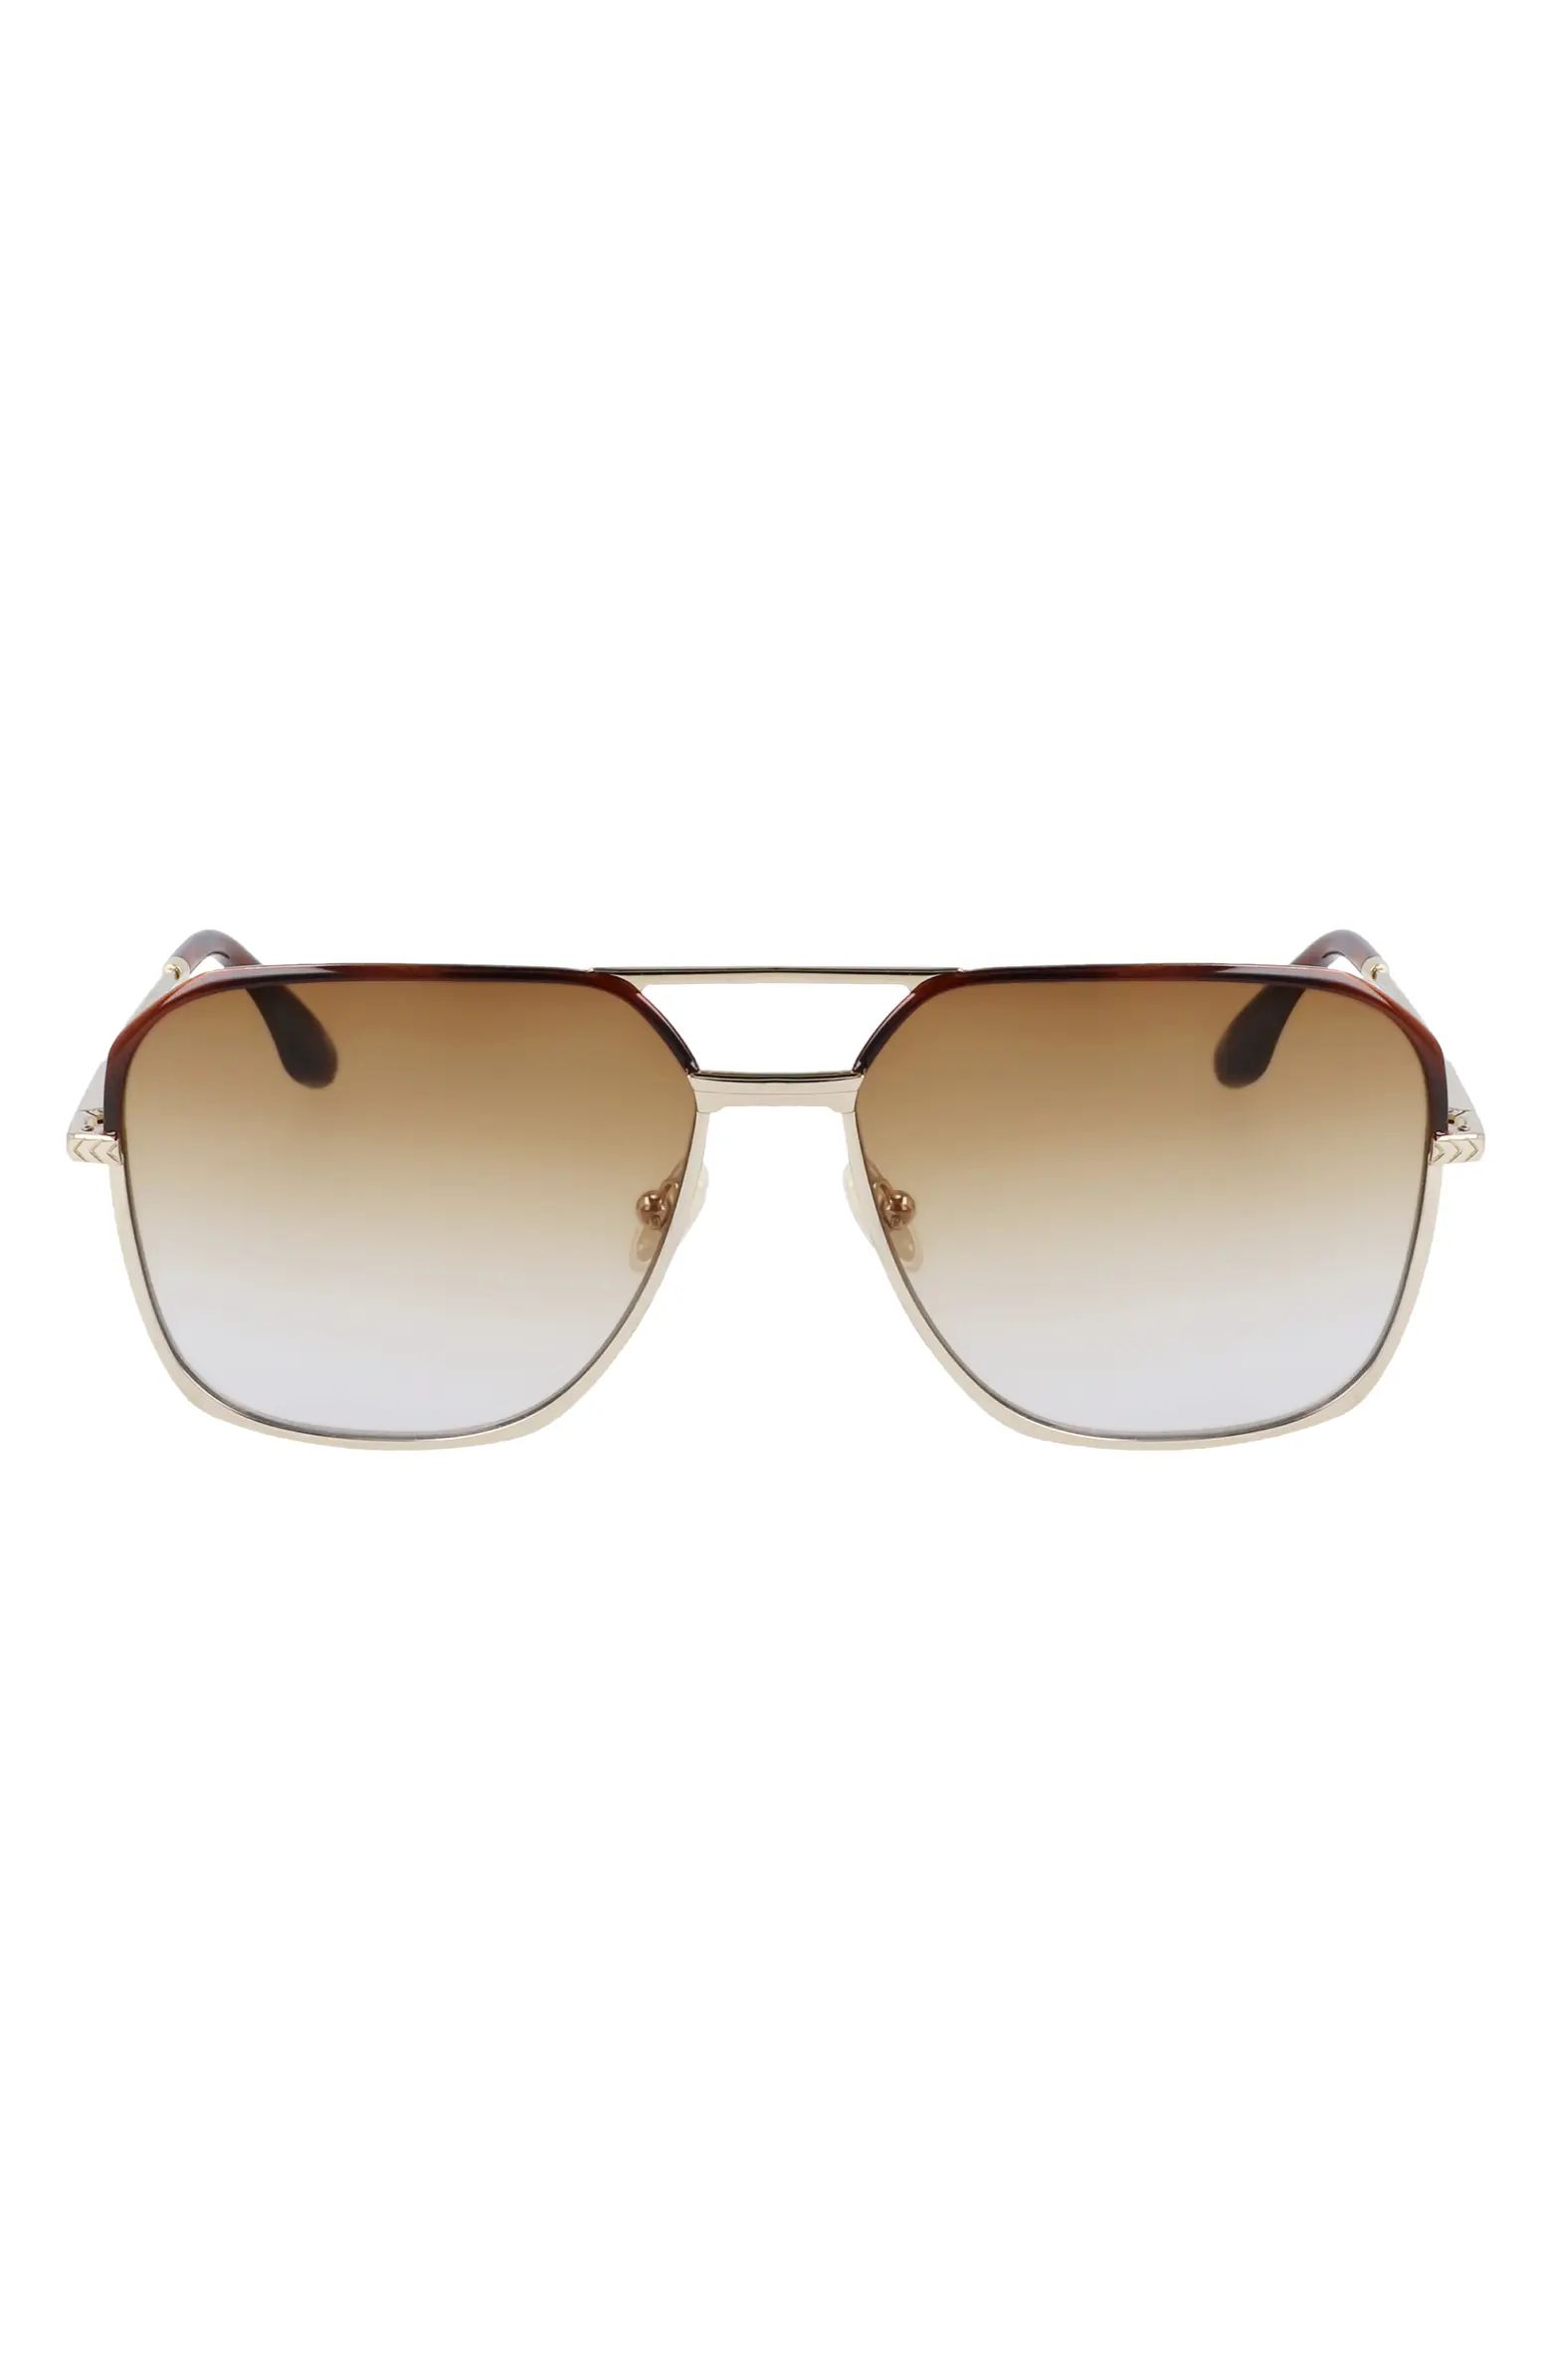 Victoria Beckham 59mm Gradient Aviator Sunglasses | Nordstrom | Nordstrom